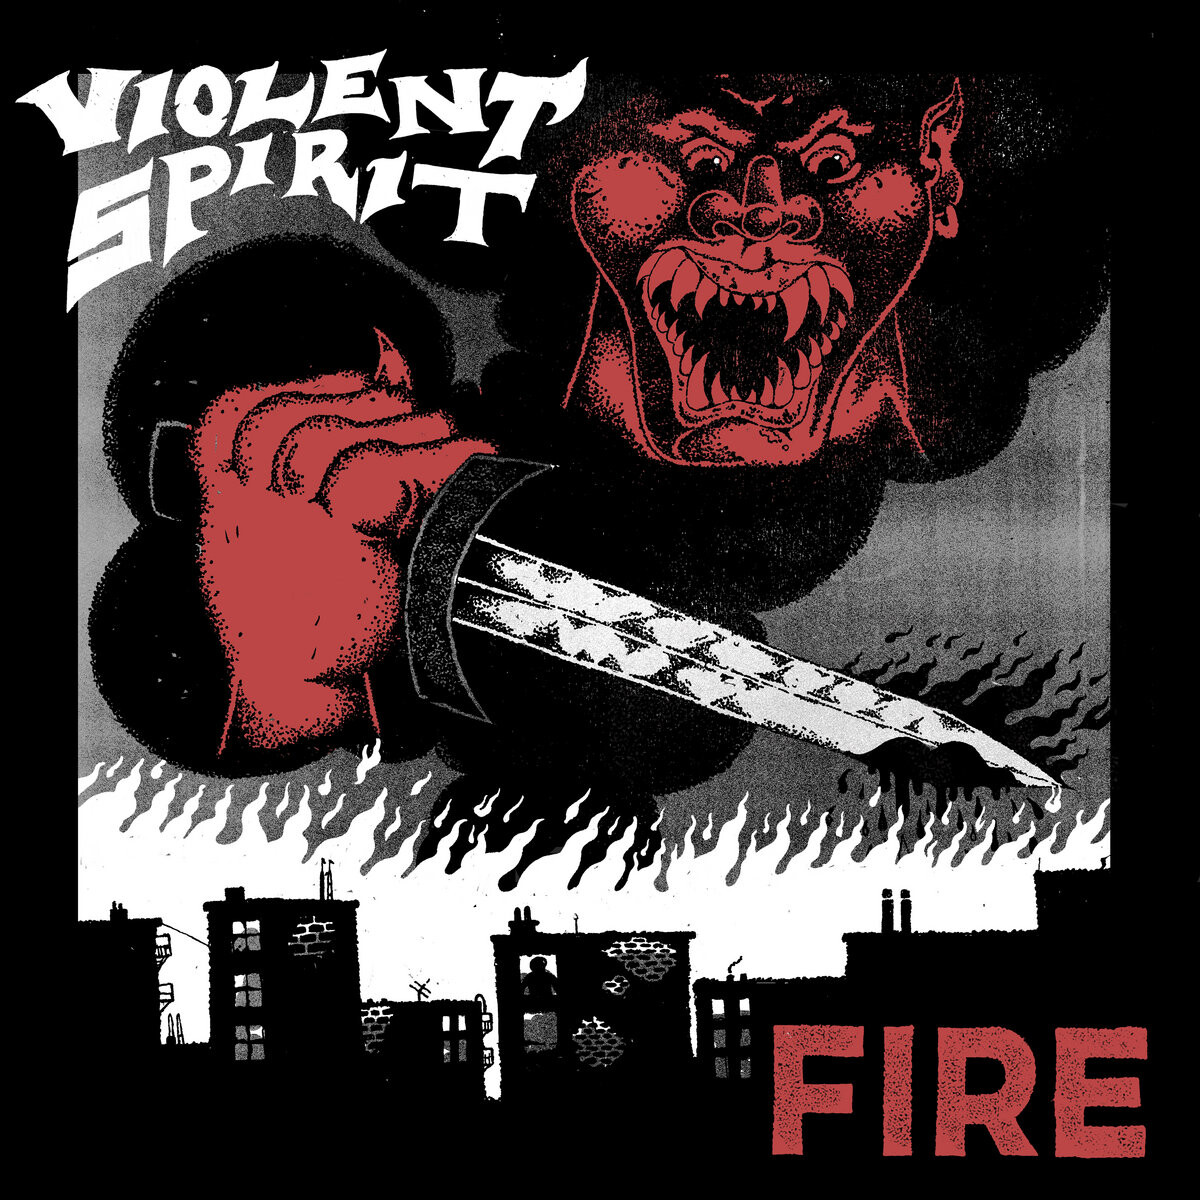 violent-spirit-fire